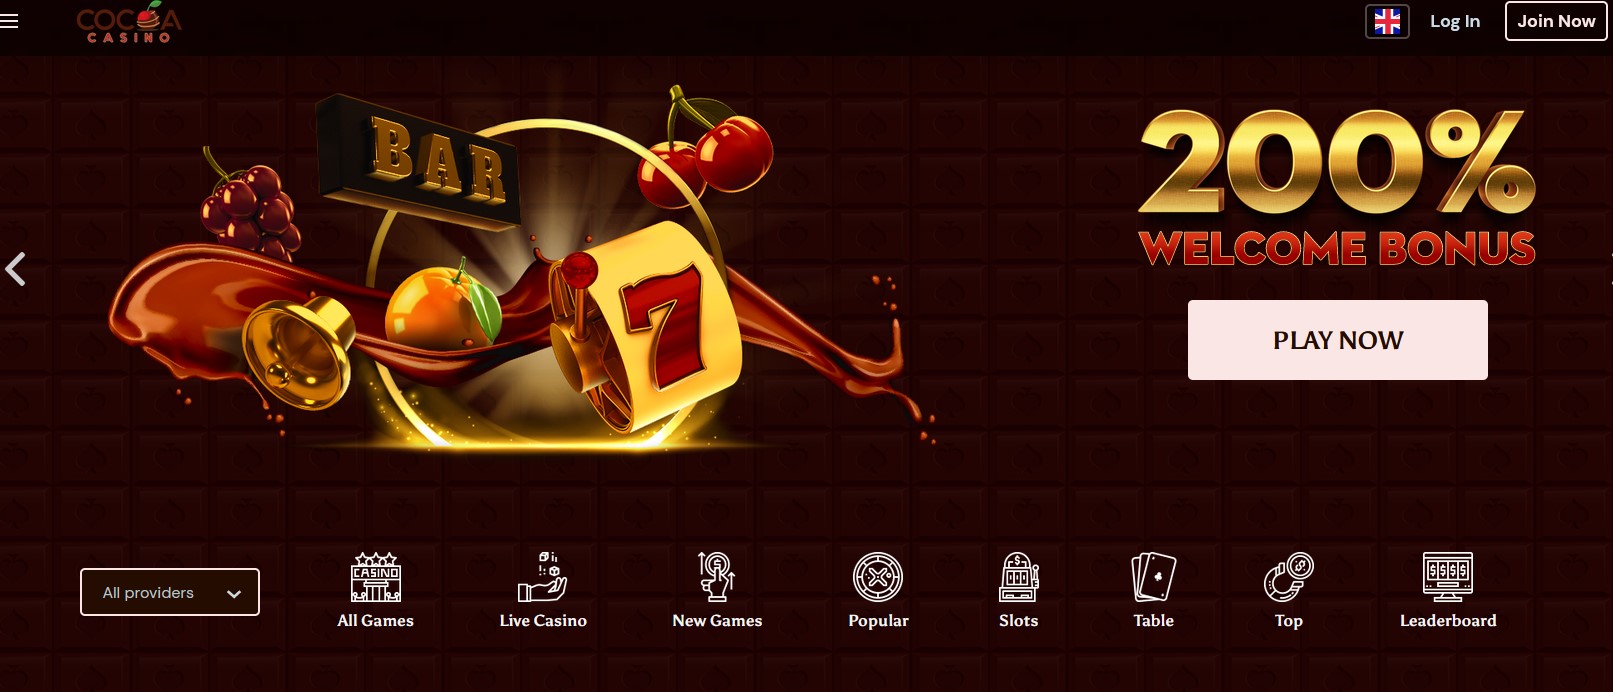 cocoa casino website homepage screenshot